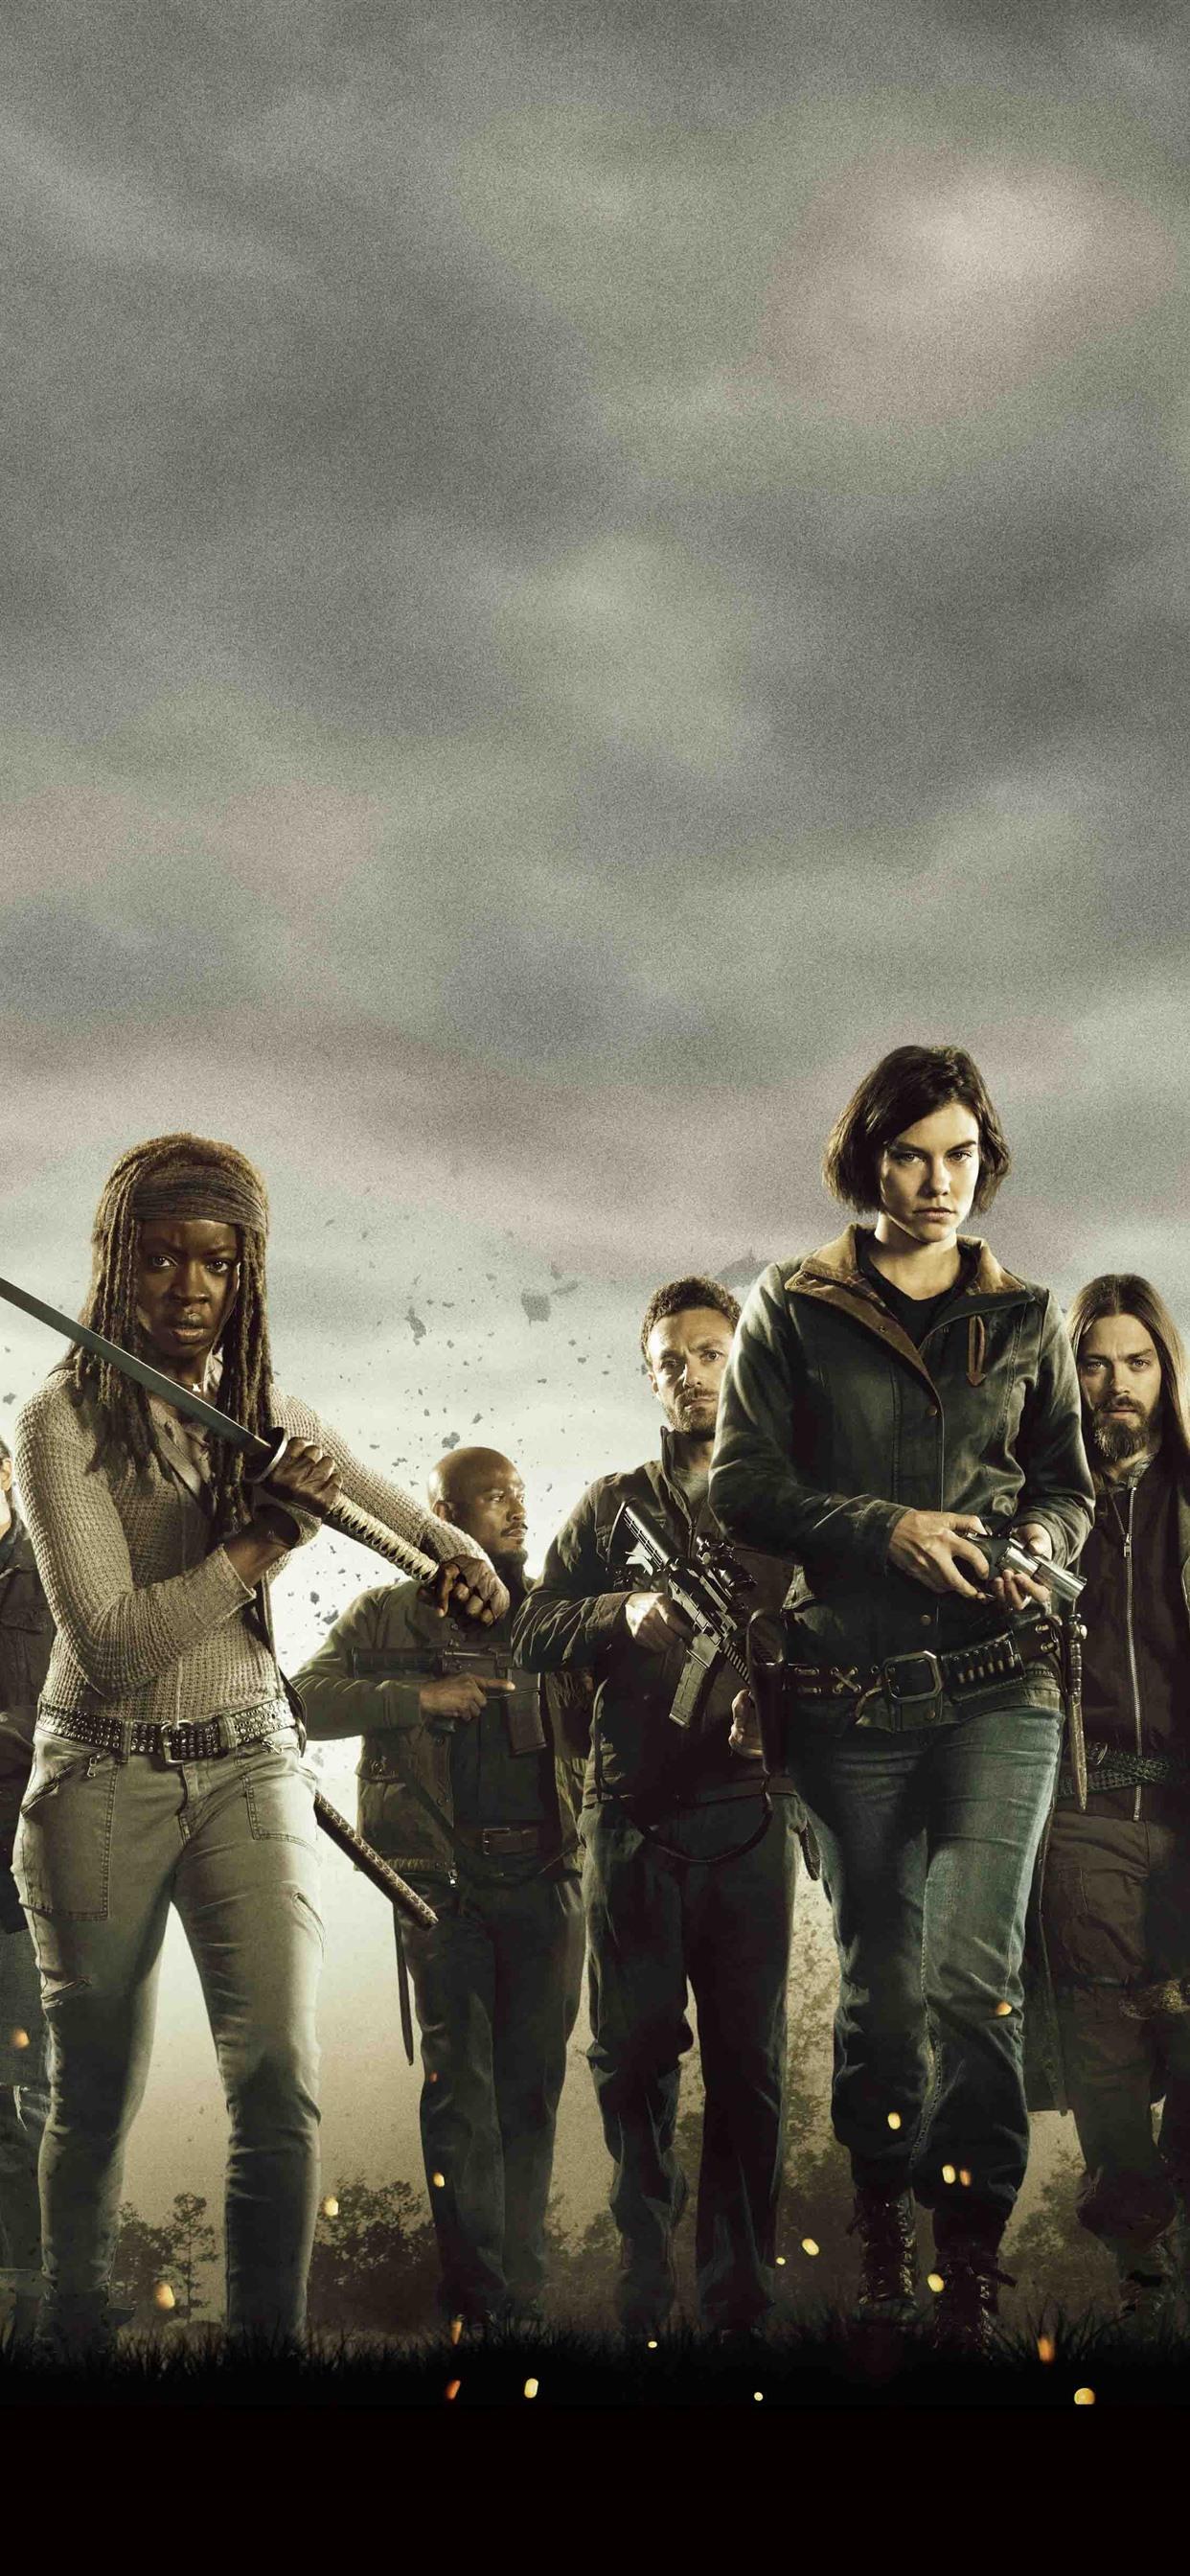 The Walking Dead, AMC TV series 1242x2688 iPhone XS Max